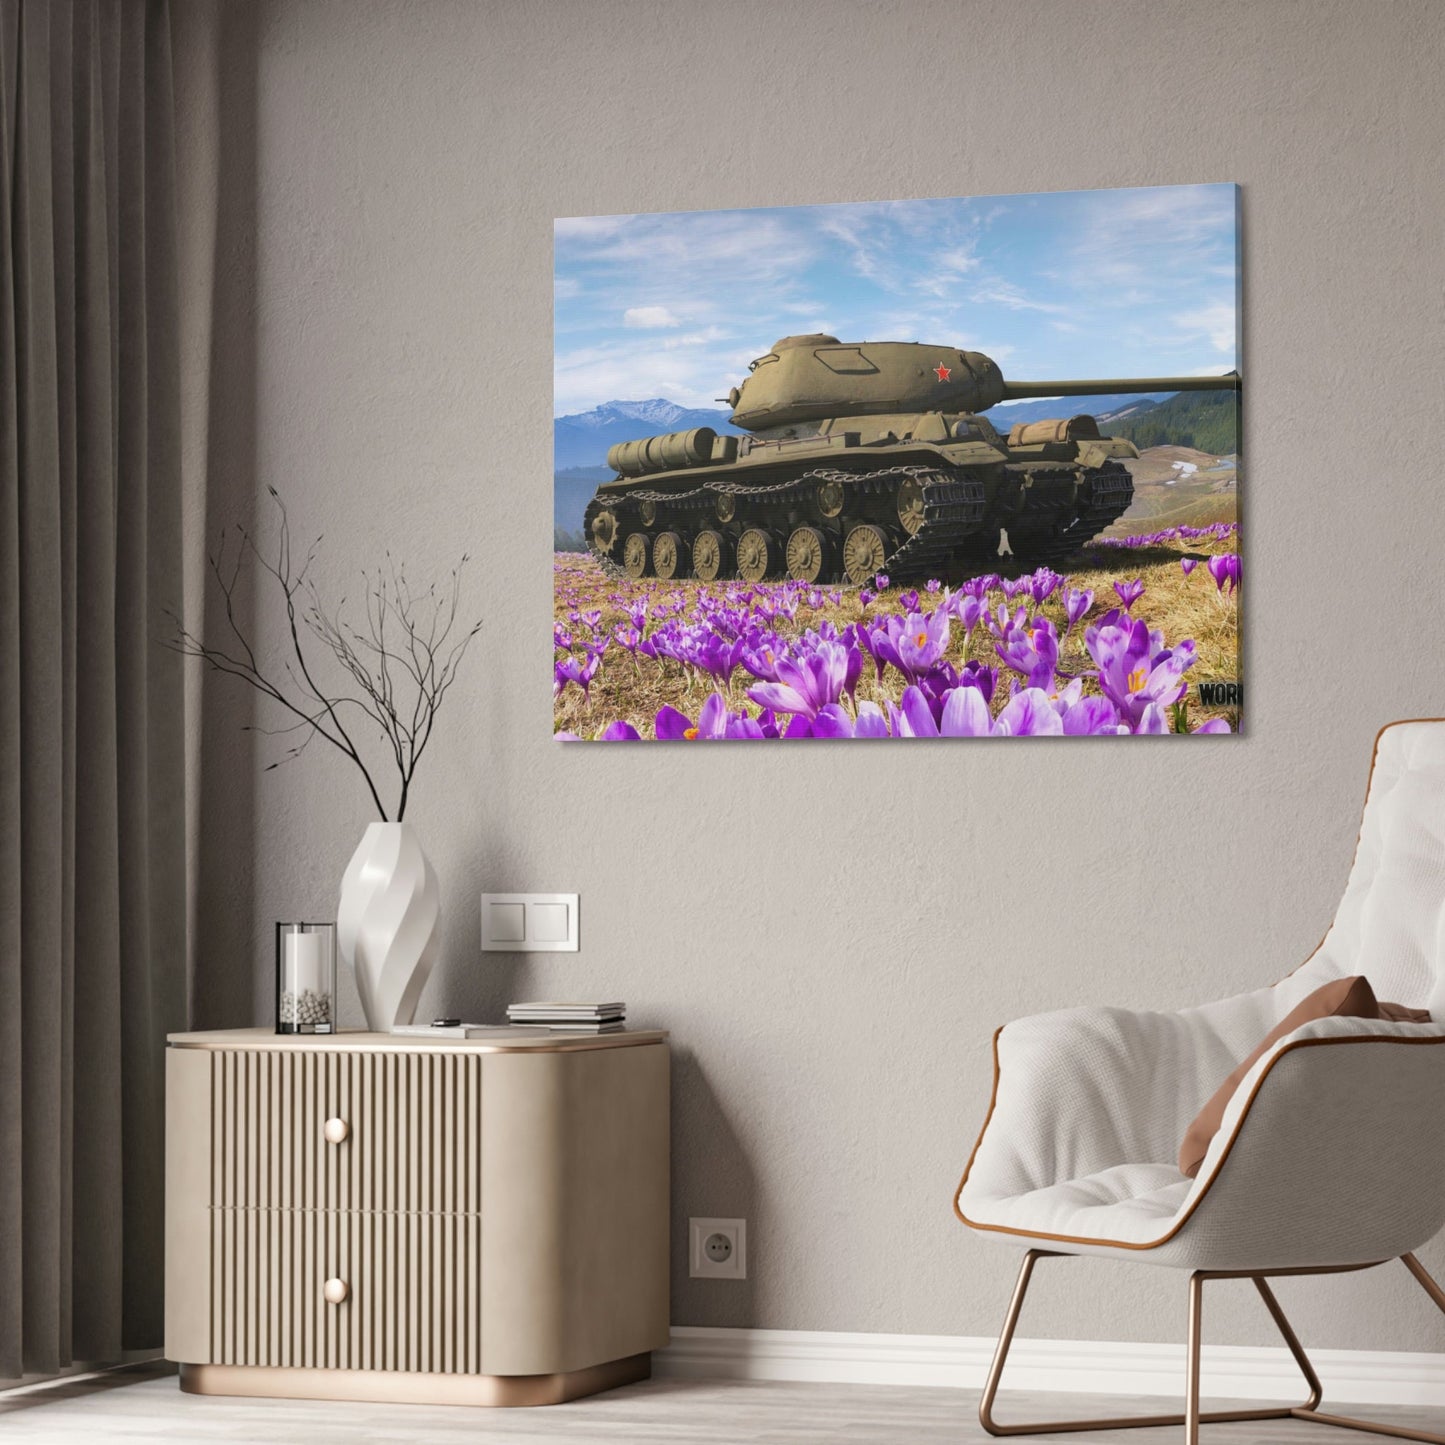 Strategic Brilliance: Framed Canvas Showcasing World of Tanks Tactics